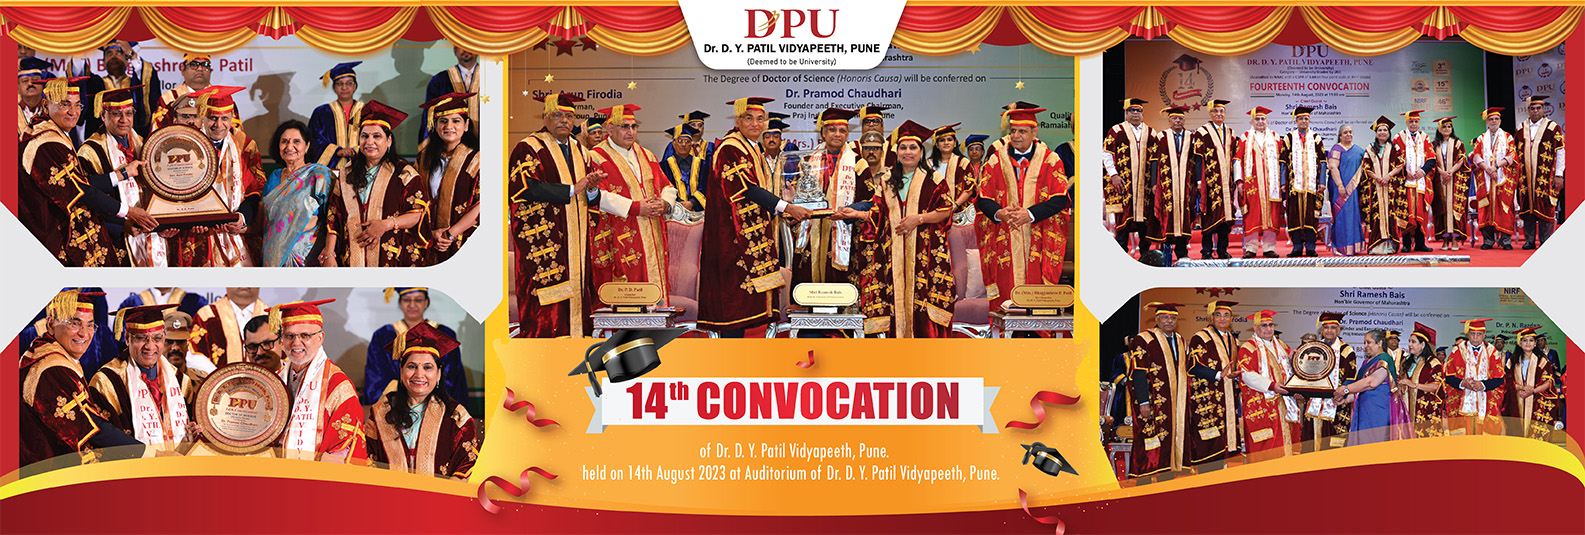 14th Convocation